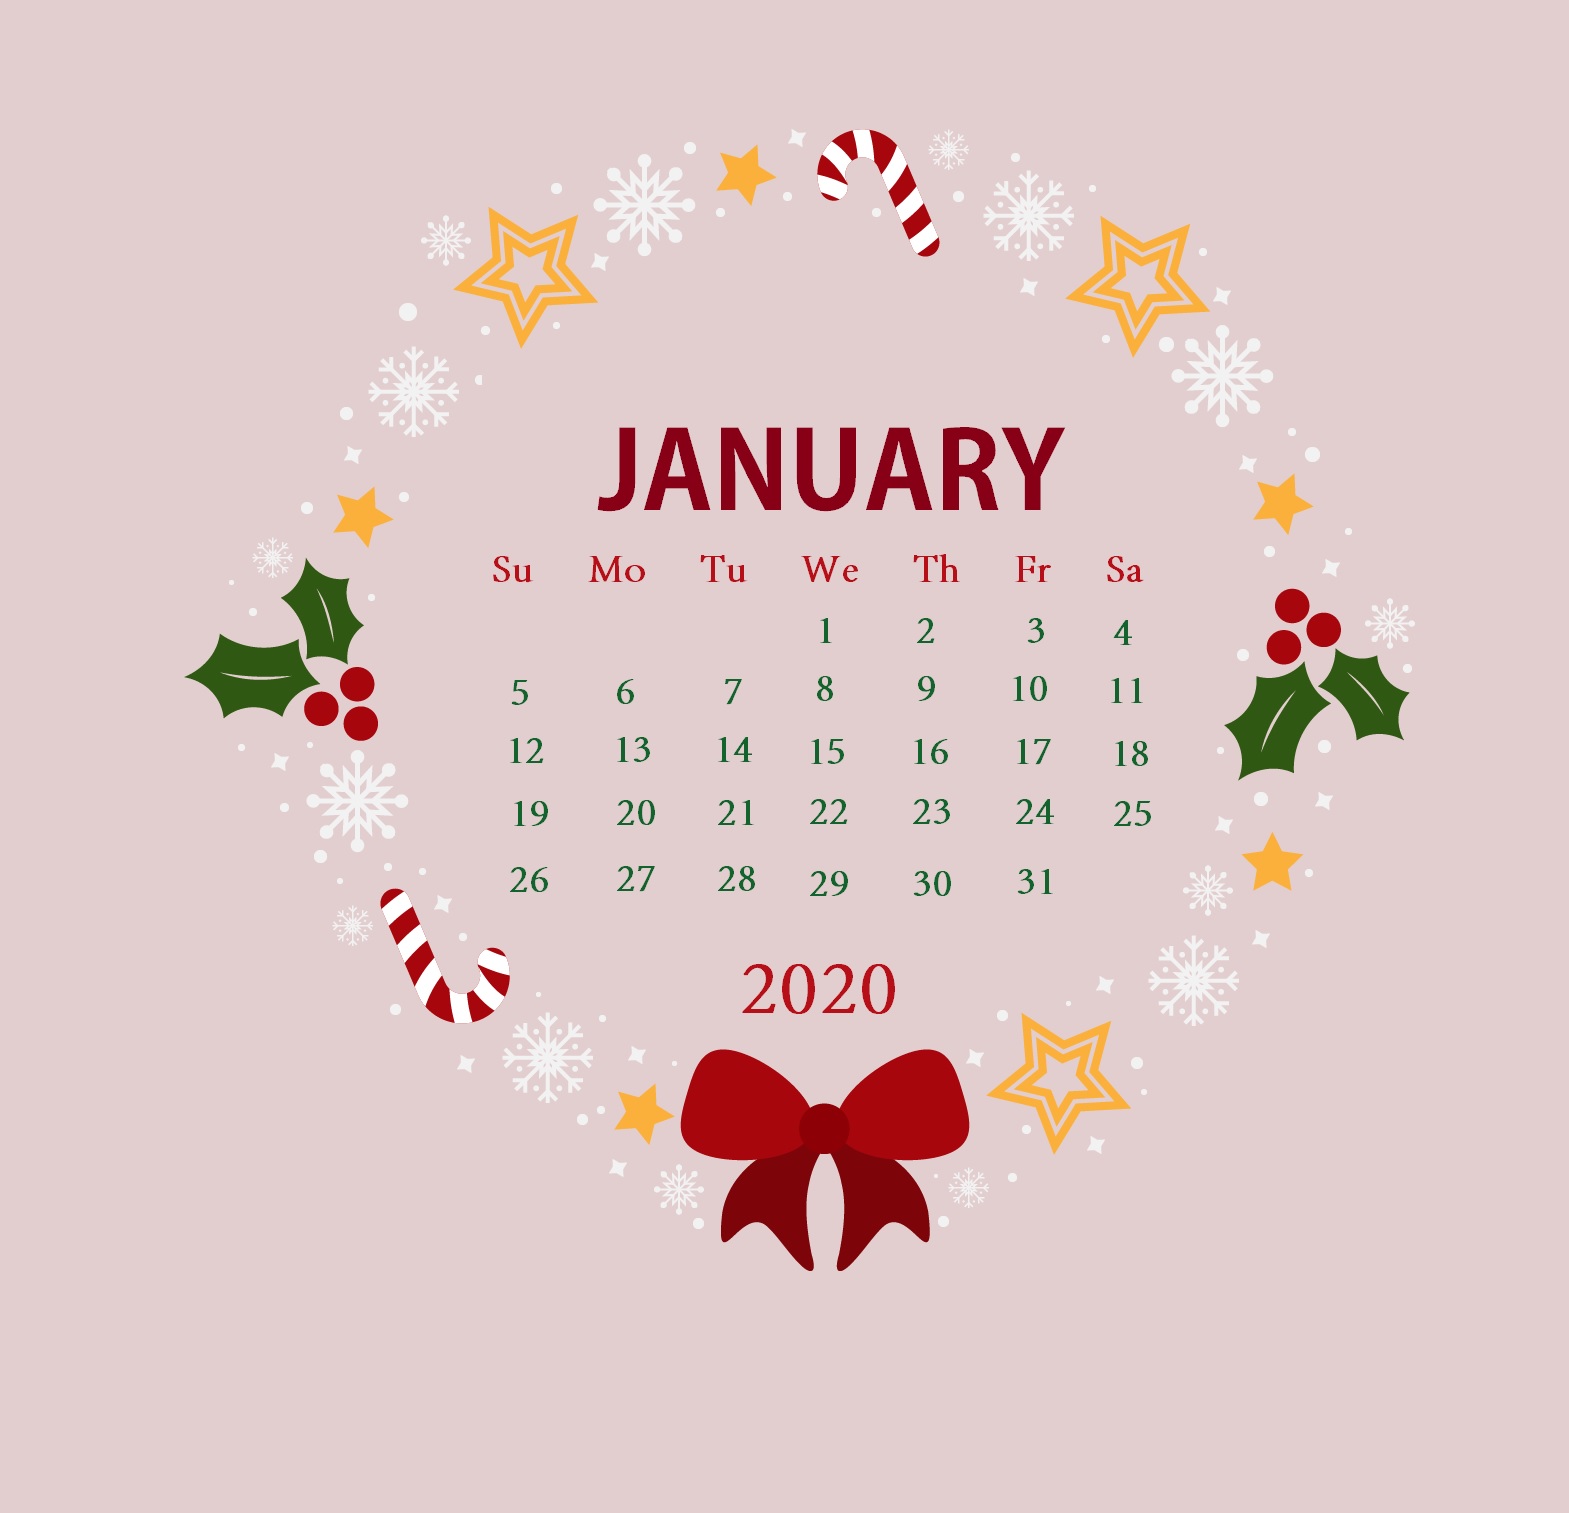 iPhone January 2020 Wallpaper Calendar Latest Calendar